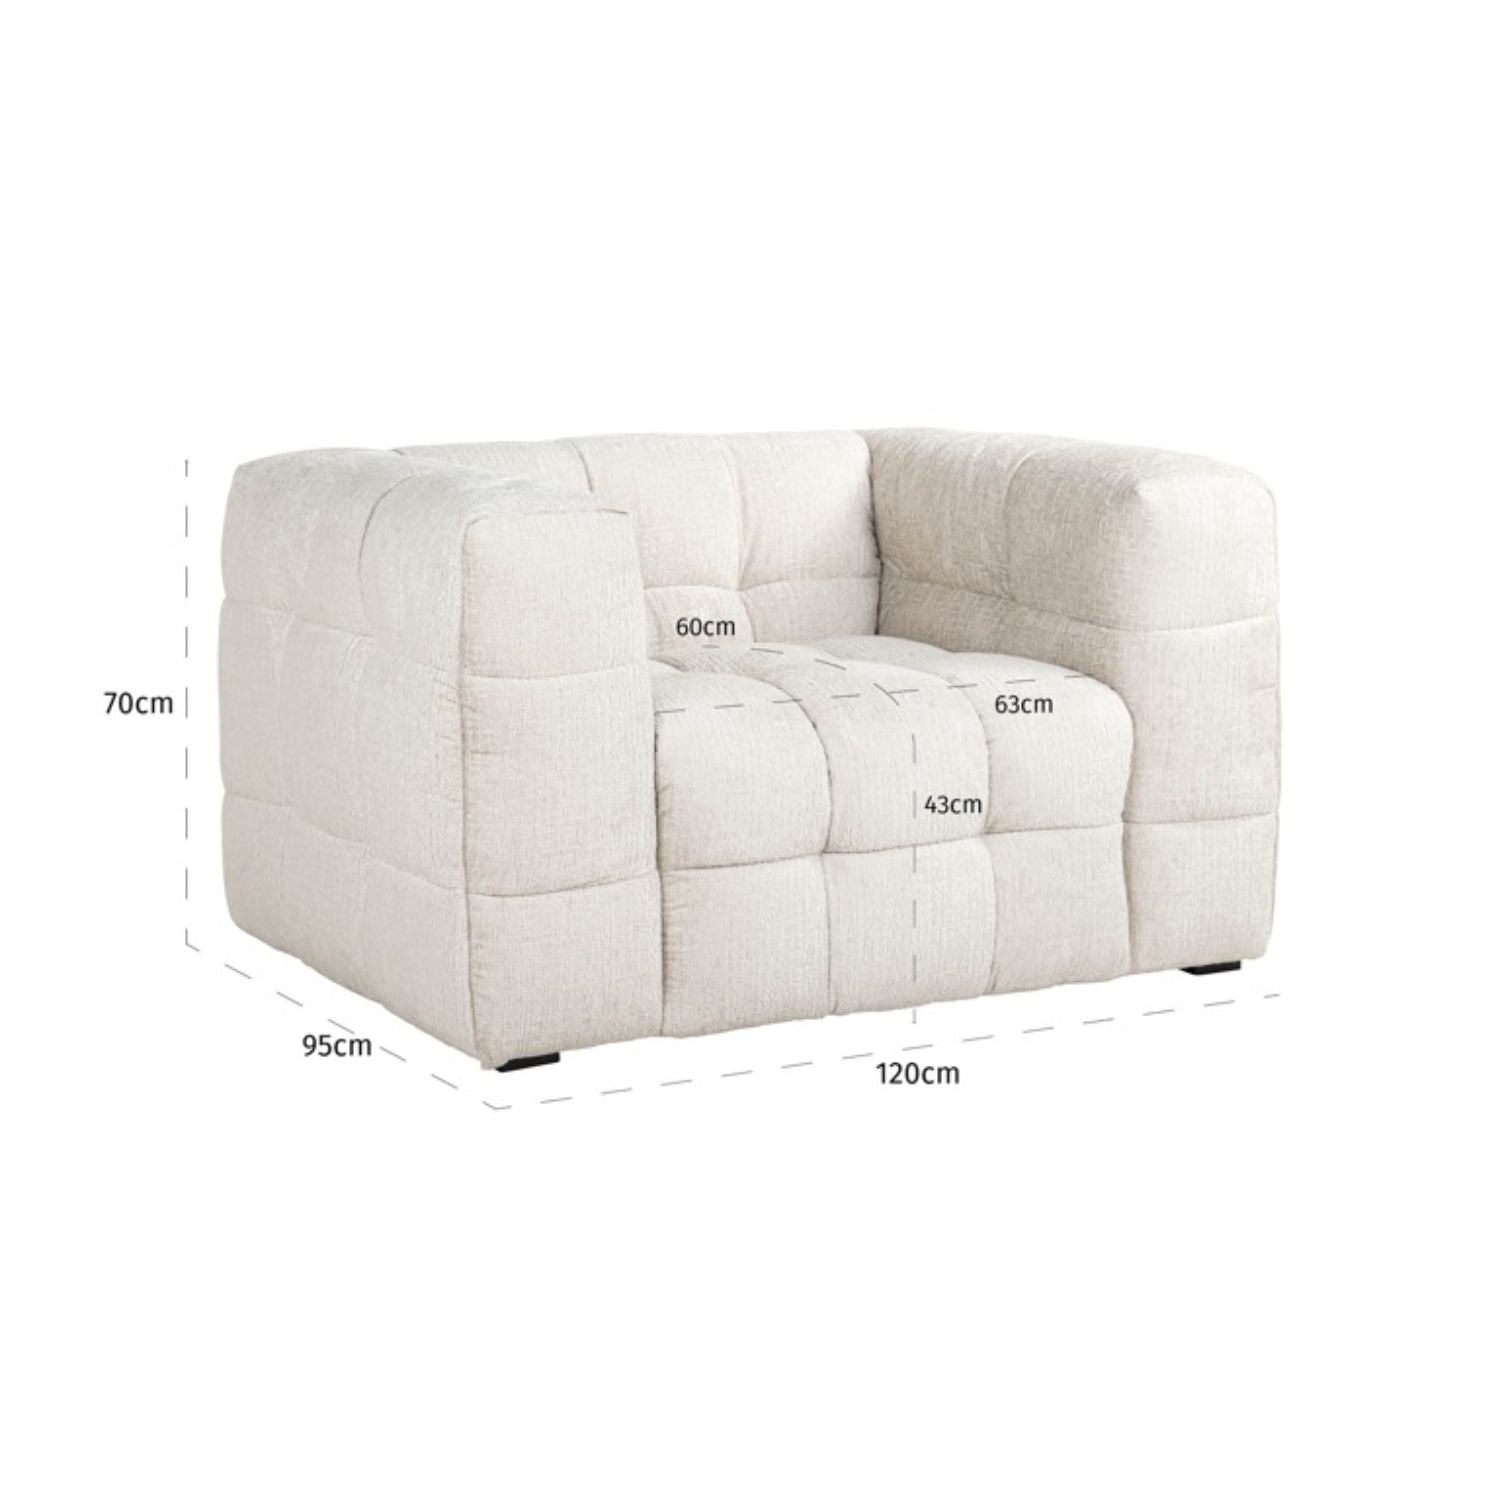 Richmond Interiors Merrol Fusion Armchair In Cream S5152 FR - Fellini Home Ltd